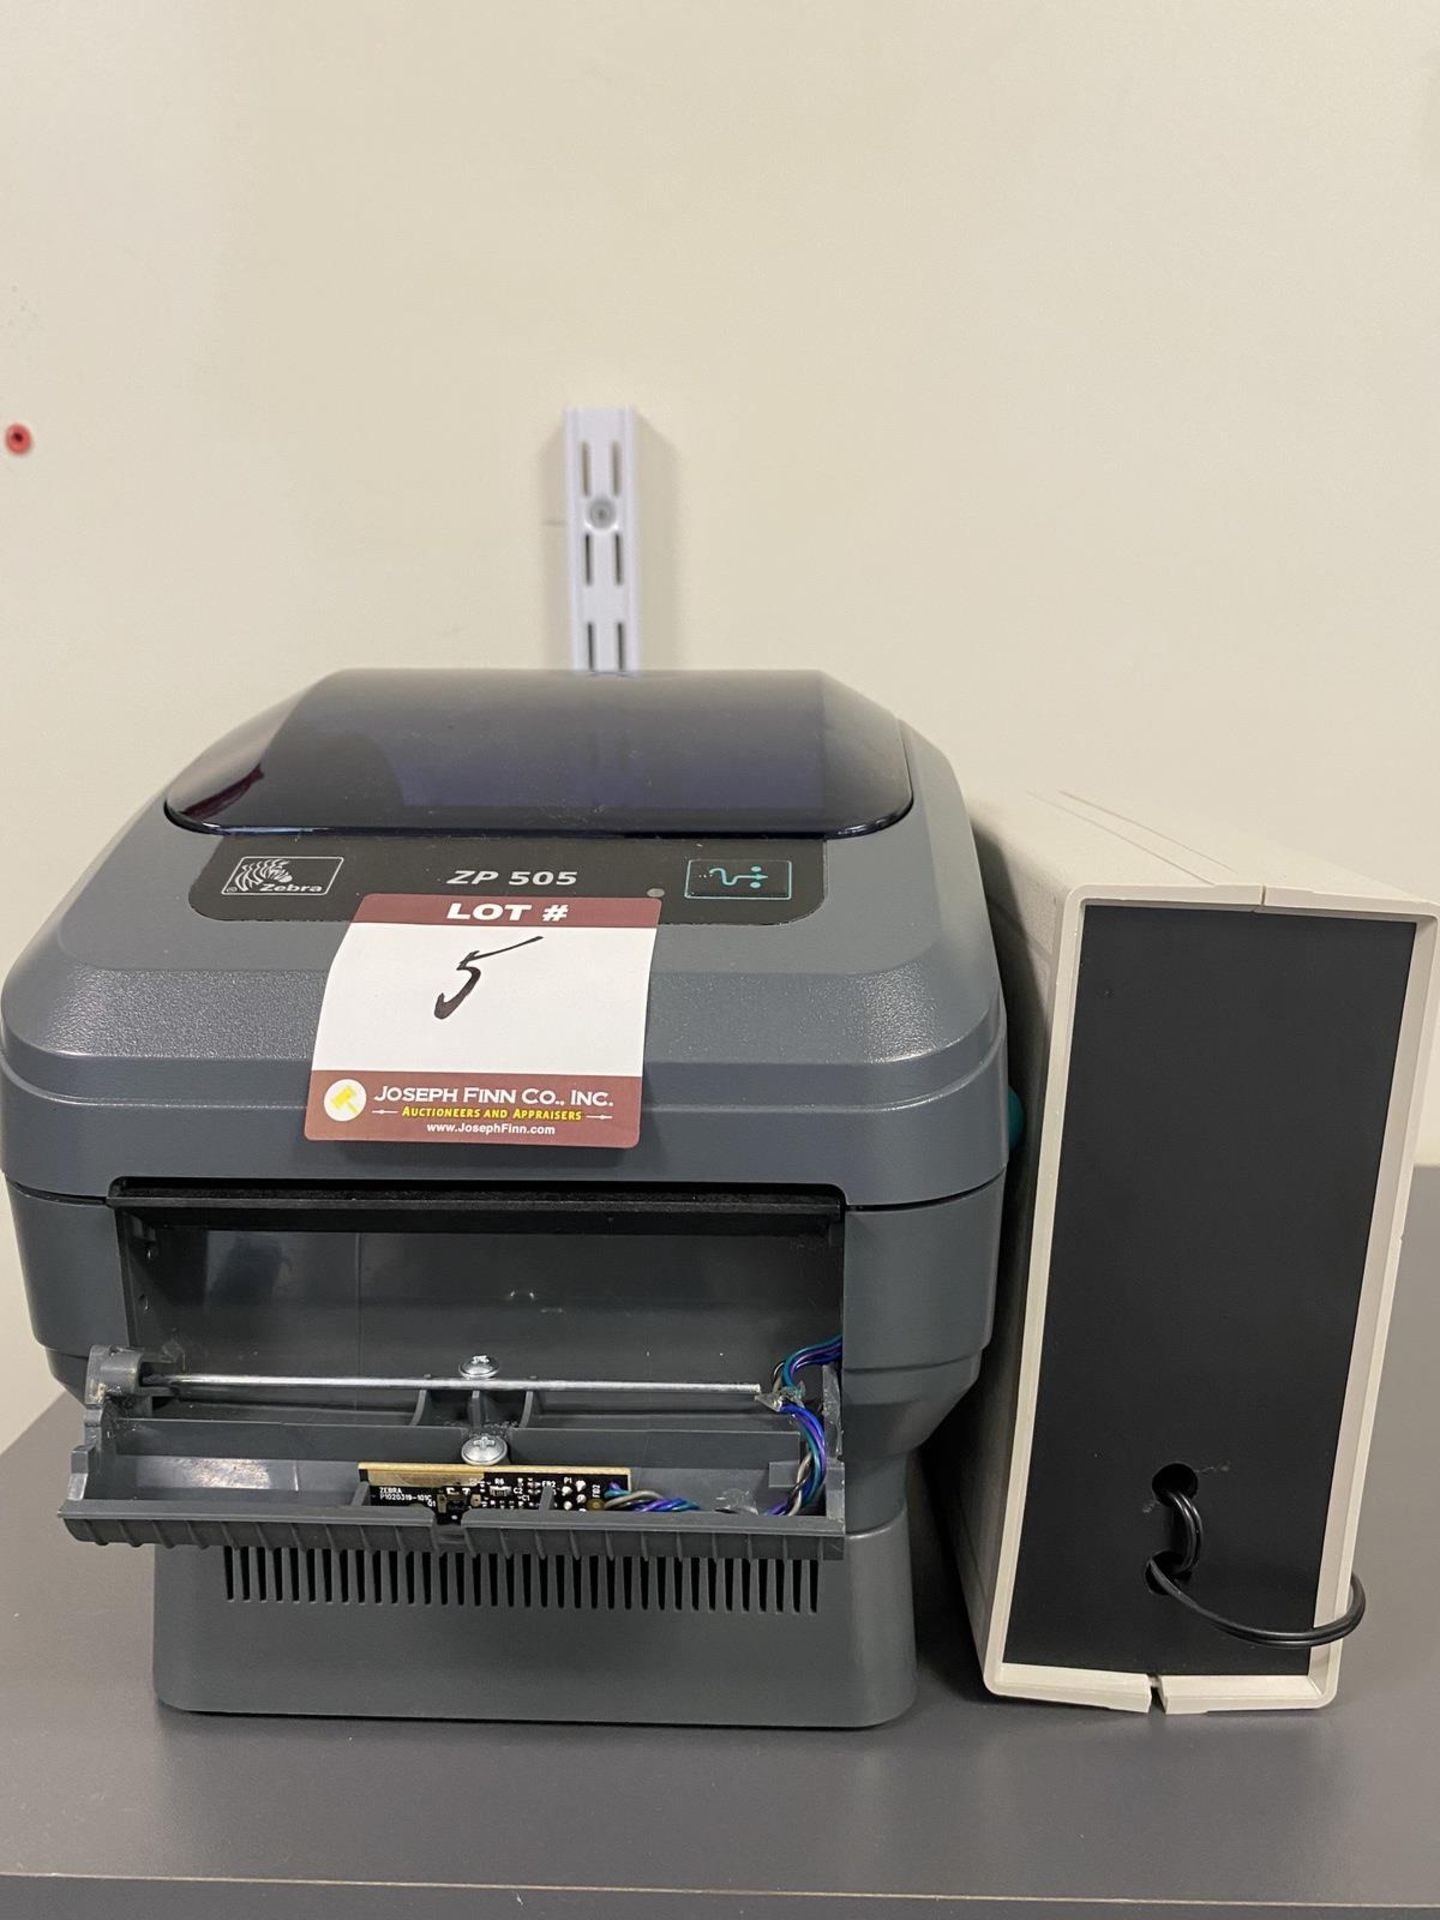 (1) Zebra ZP505 Printer